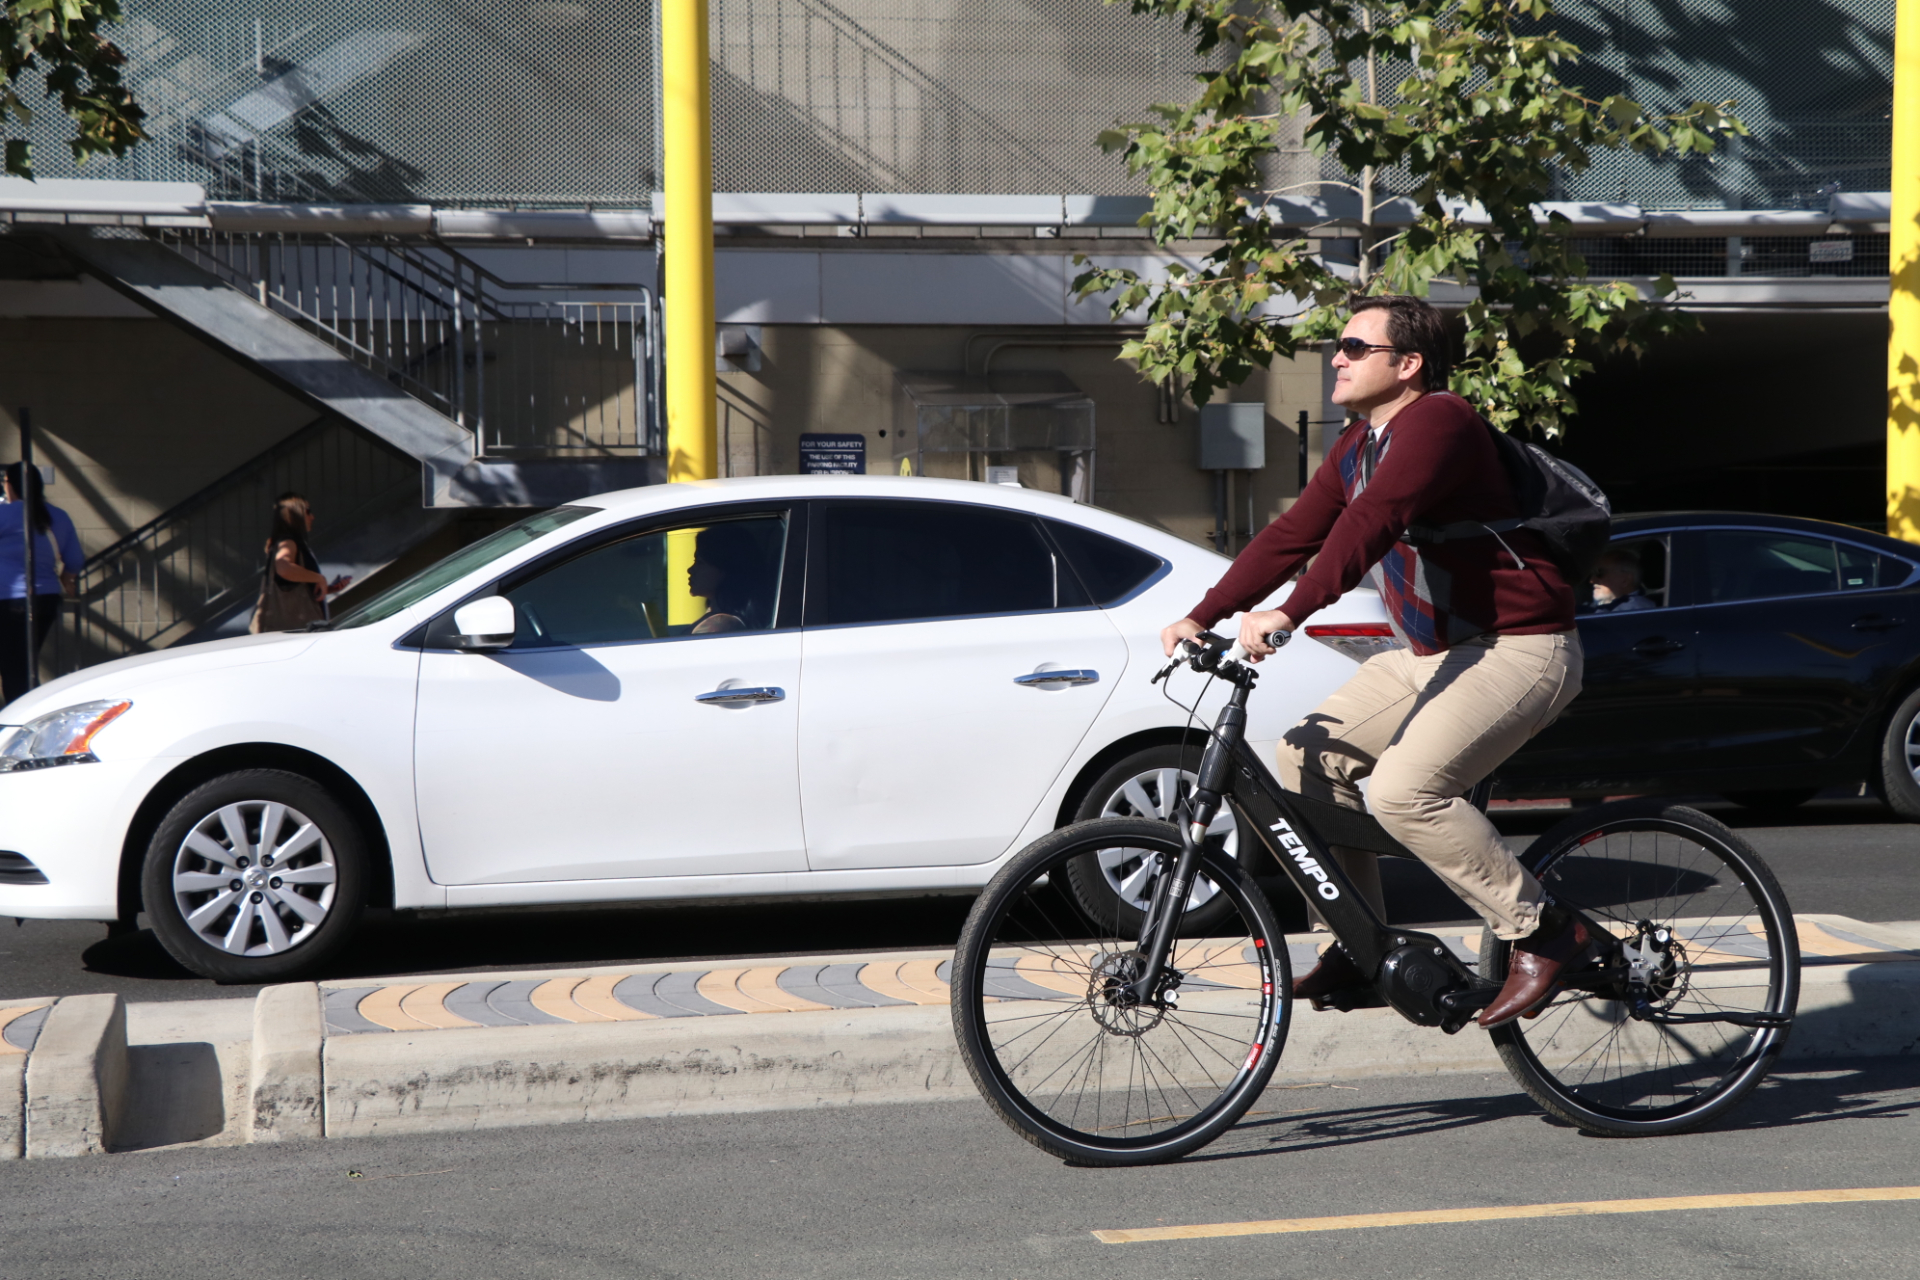 tempo e bikes designed to replace cars as primary transportation la jolla lifestyle  1